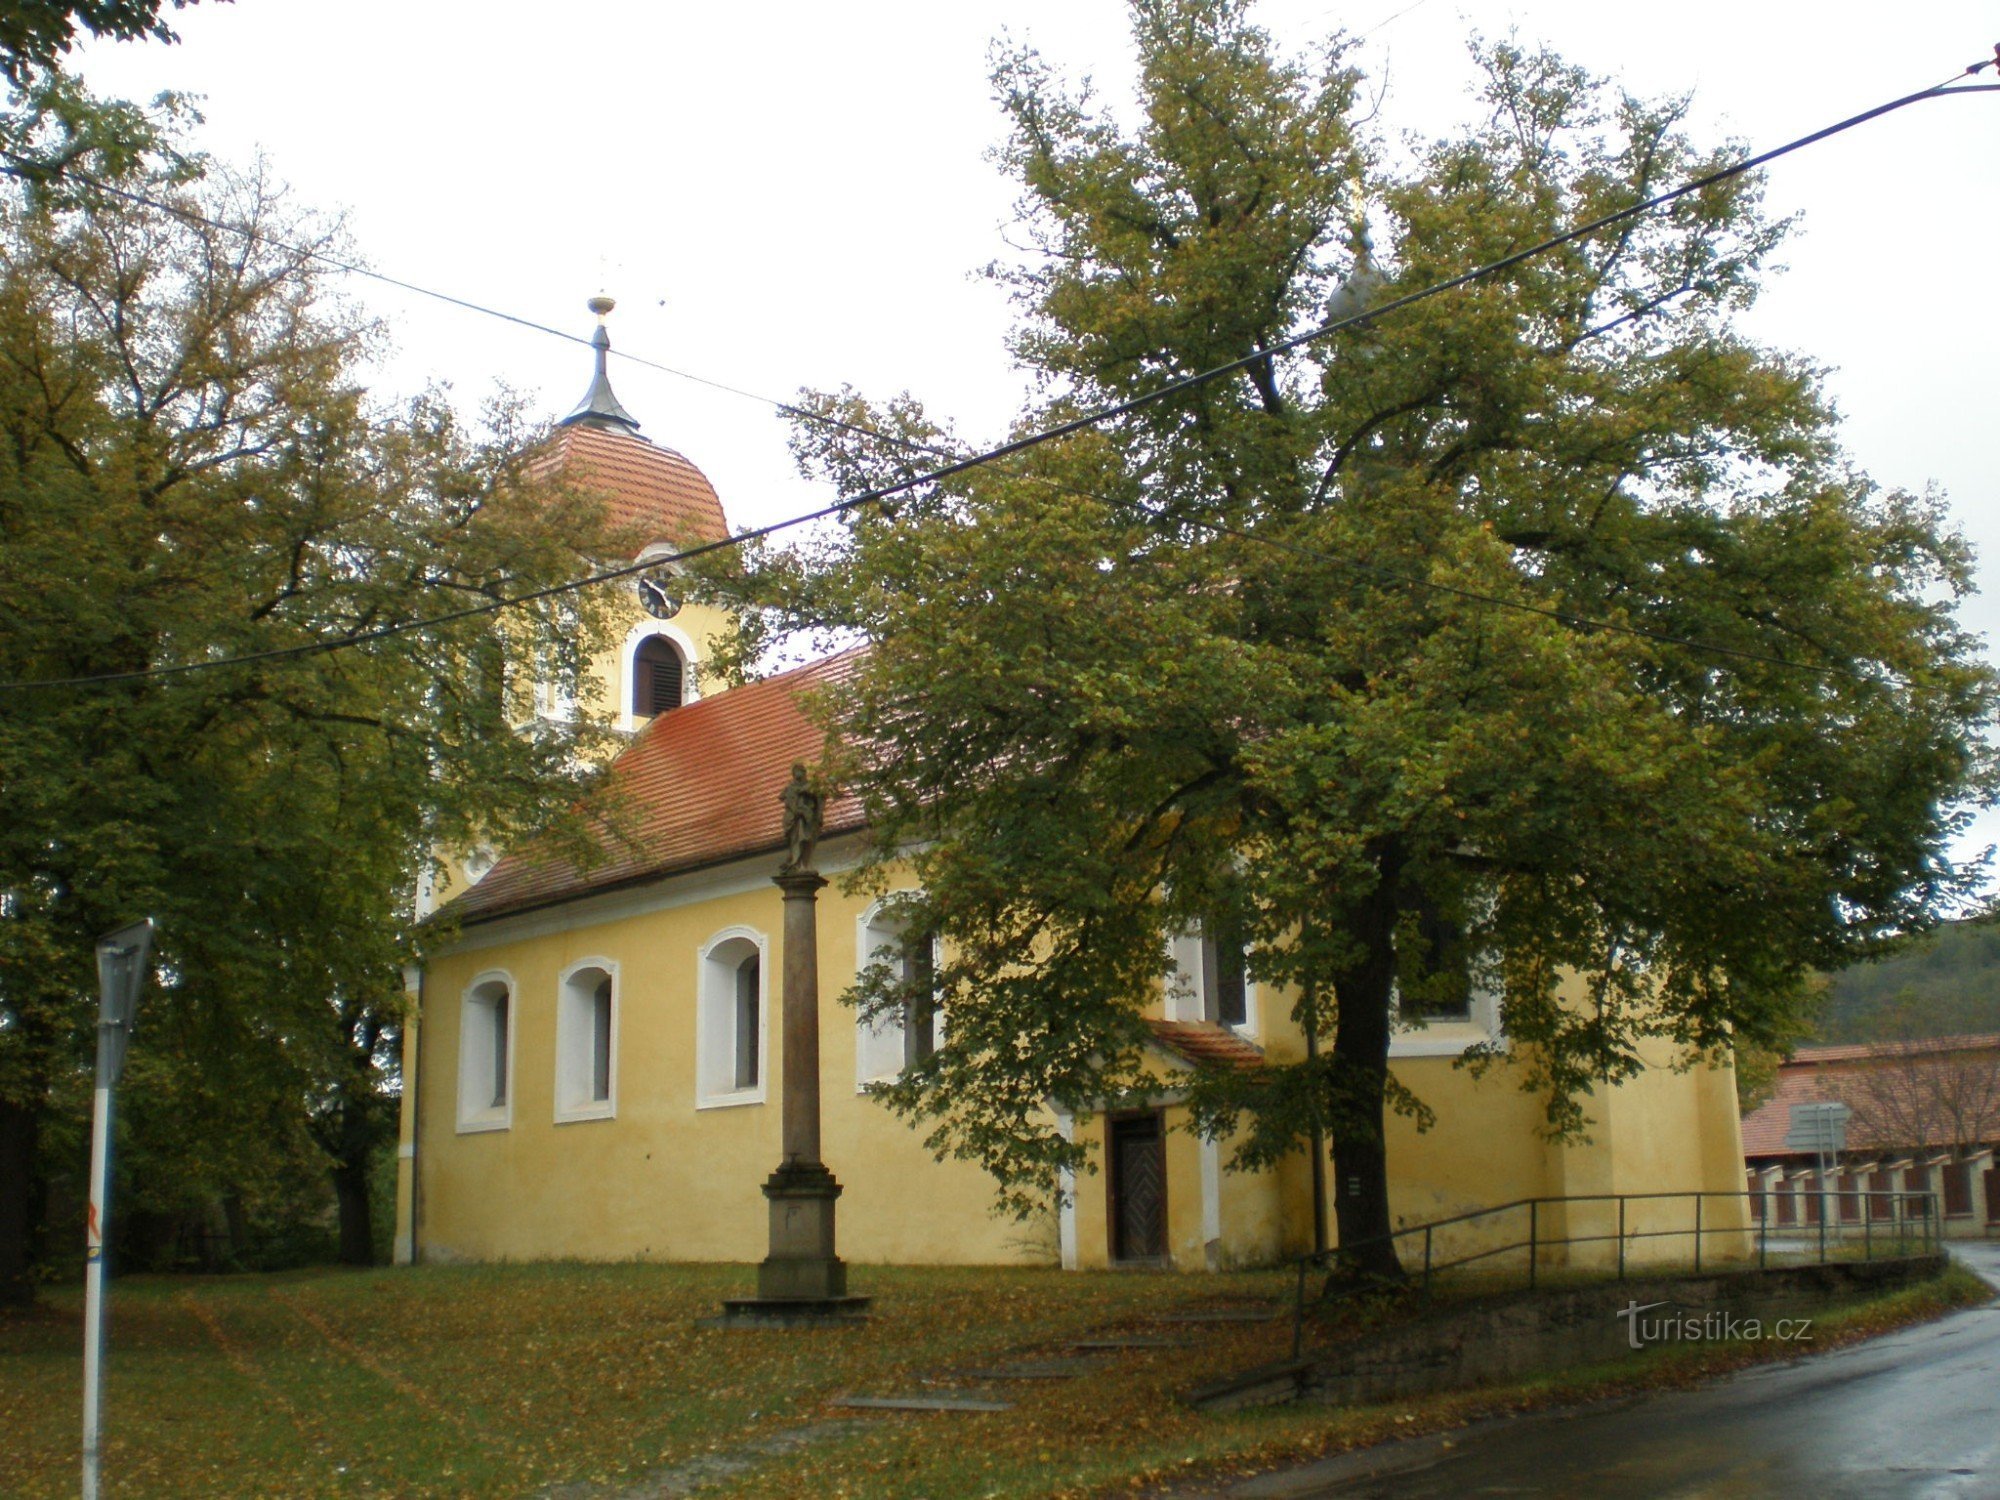 Lochovice - igreja de St. André